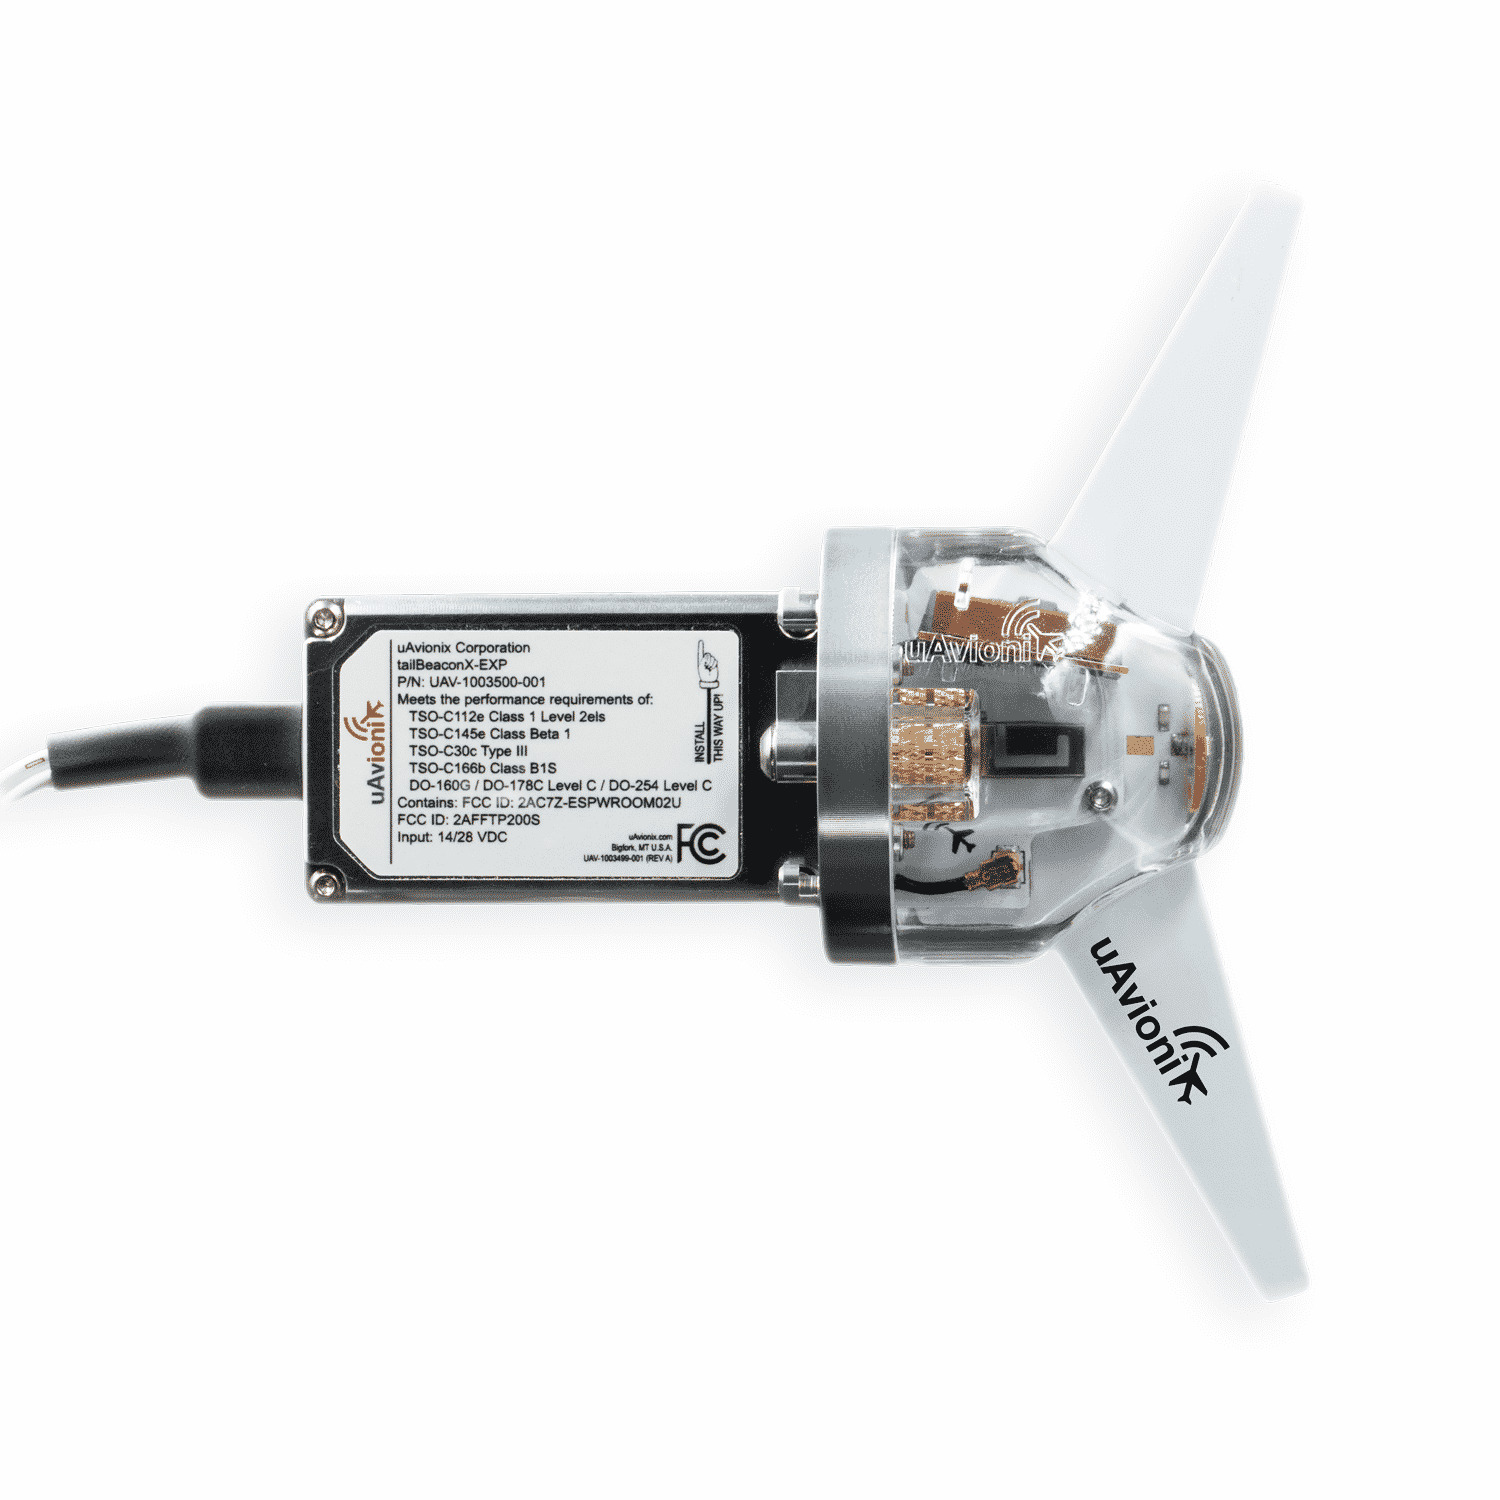 TailBeacon X, TSO, Certified, Mode S ADS-B Transponder, SBAS GPS, LED Nav Light